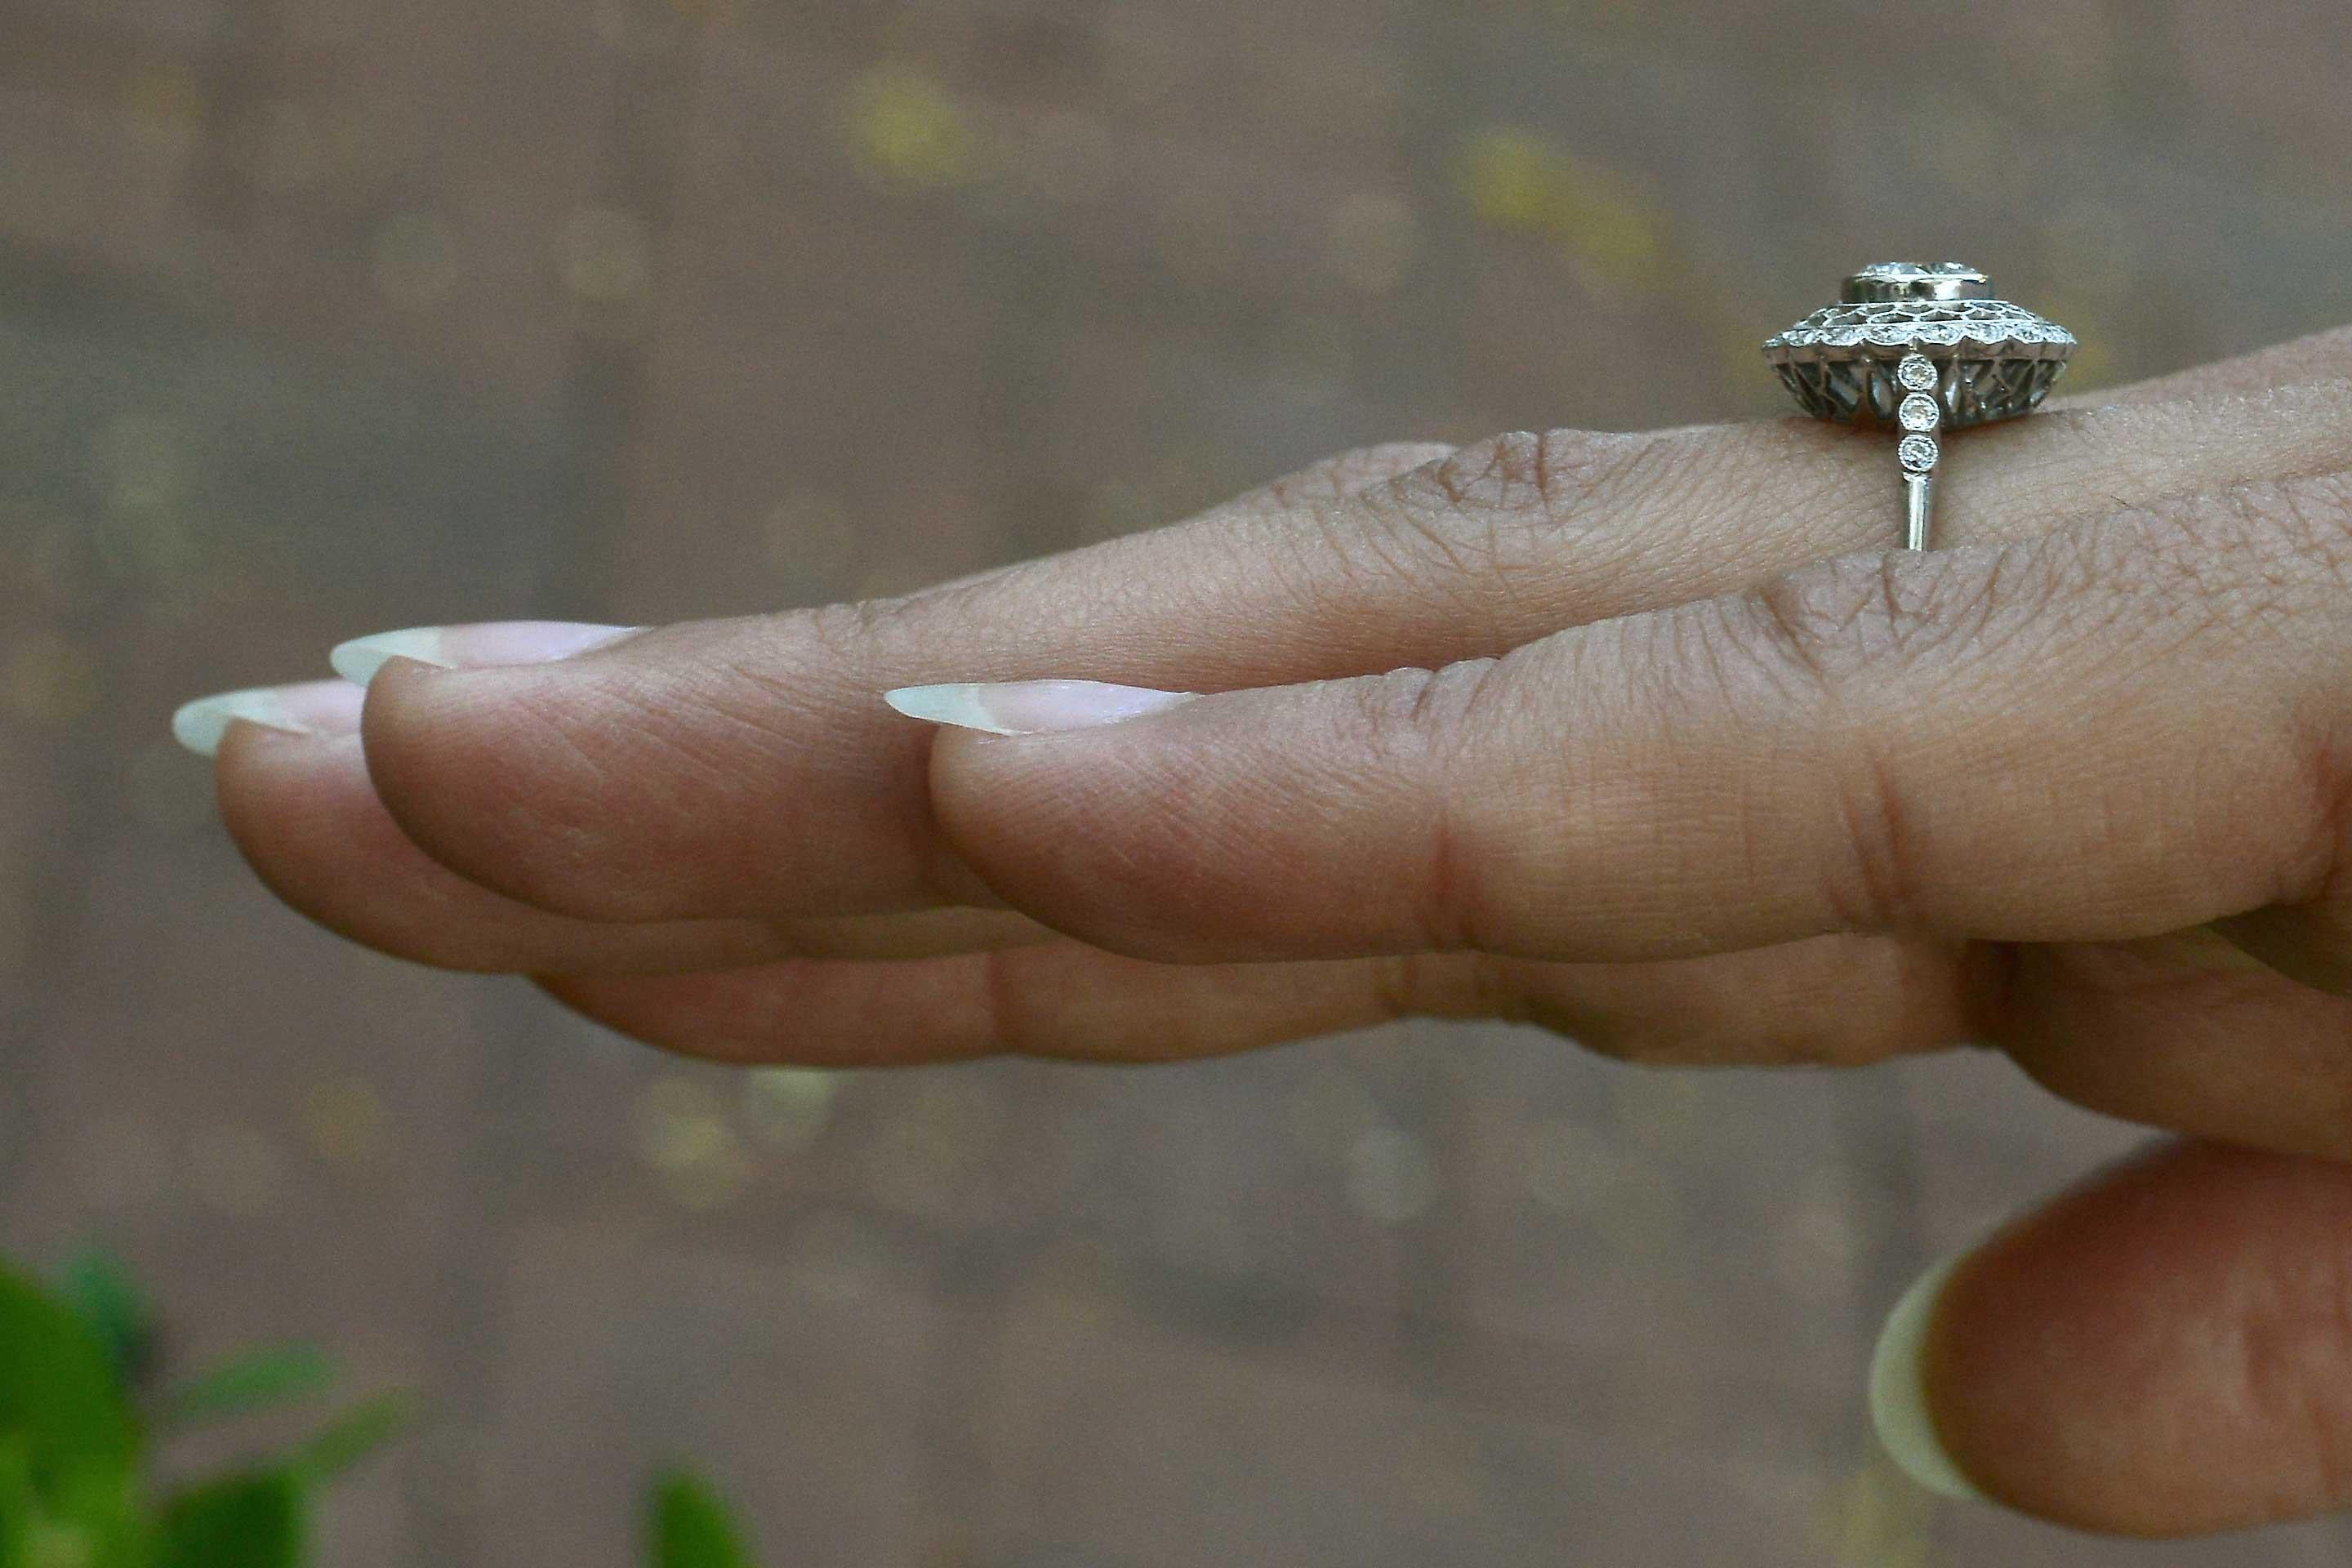 honeycomb engagement ring